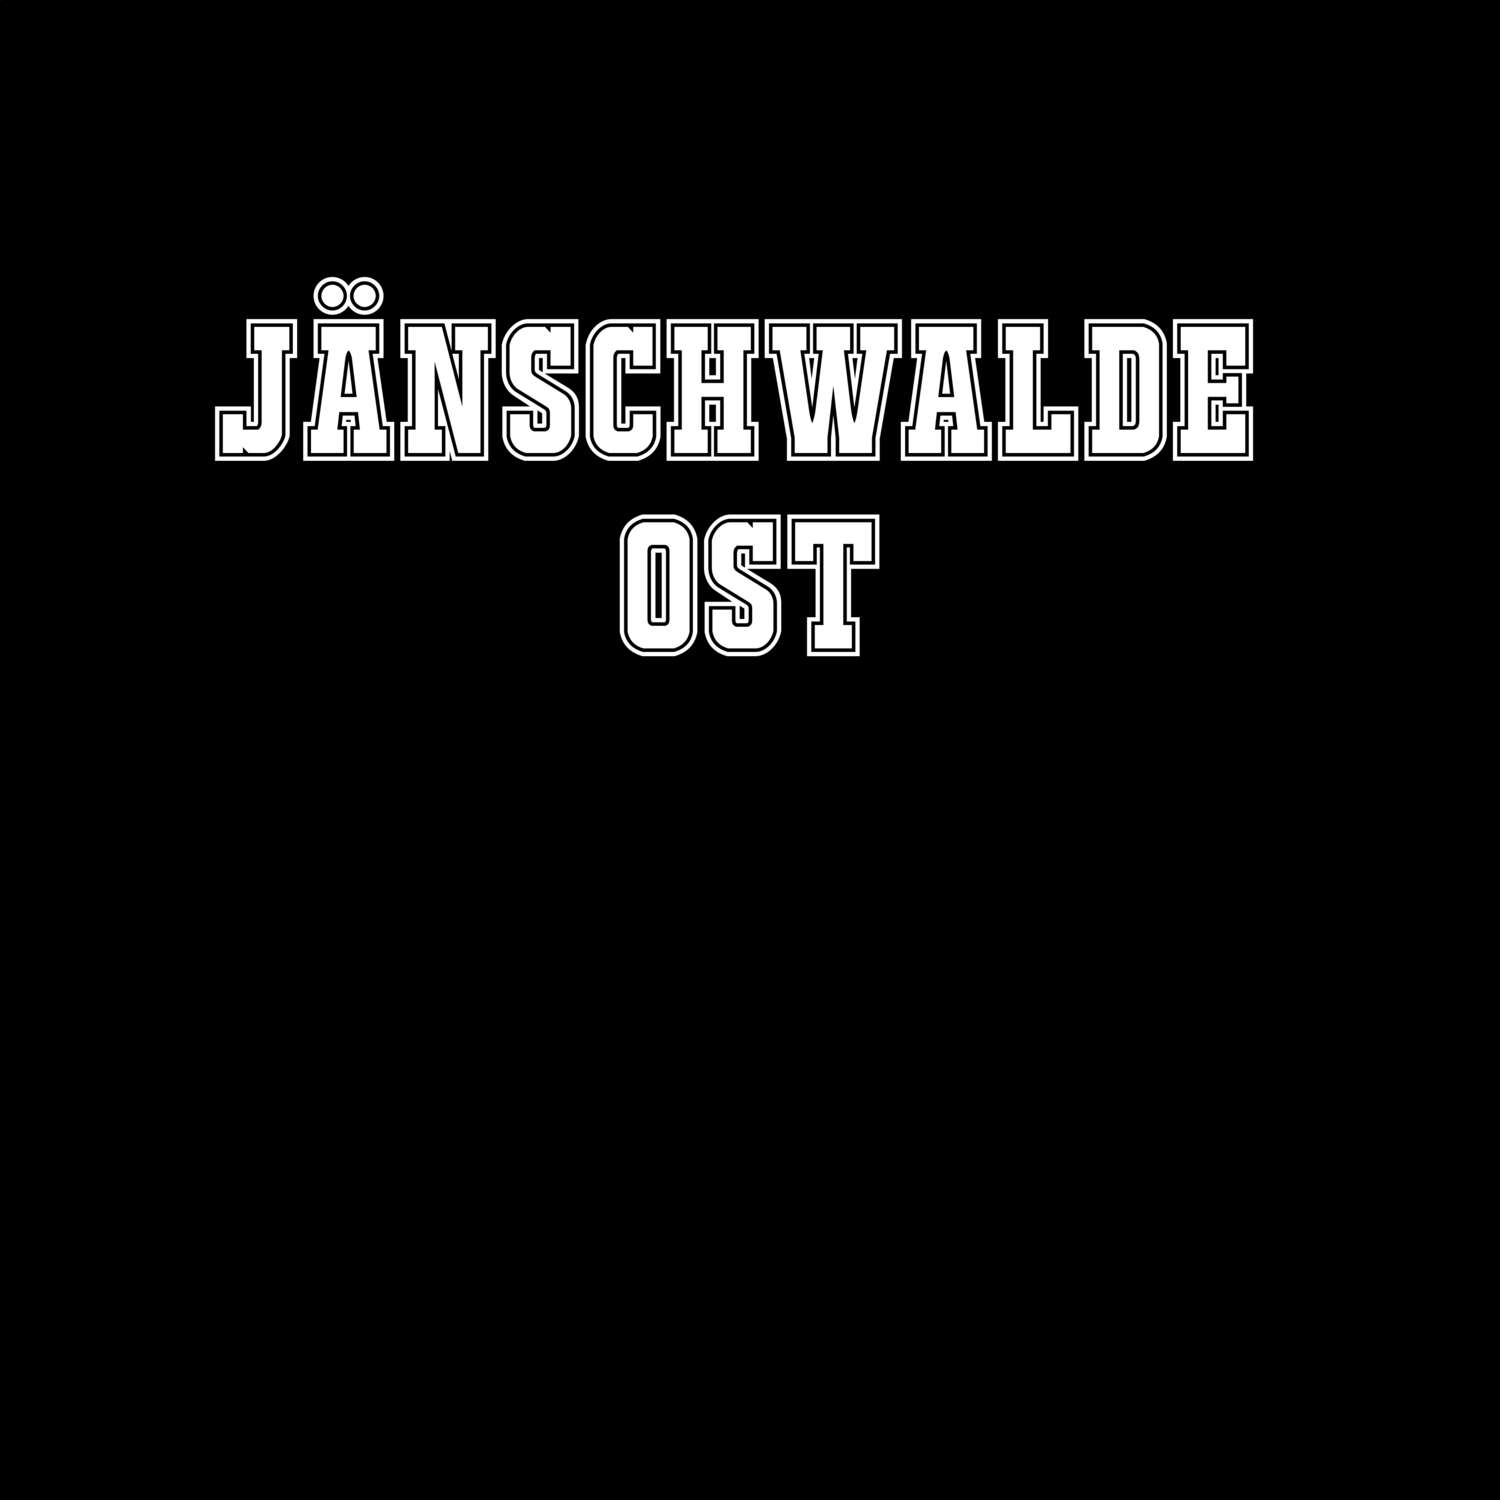 Jänschwalde Ost T-Shirt »Classic«